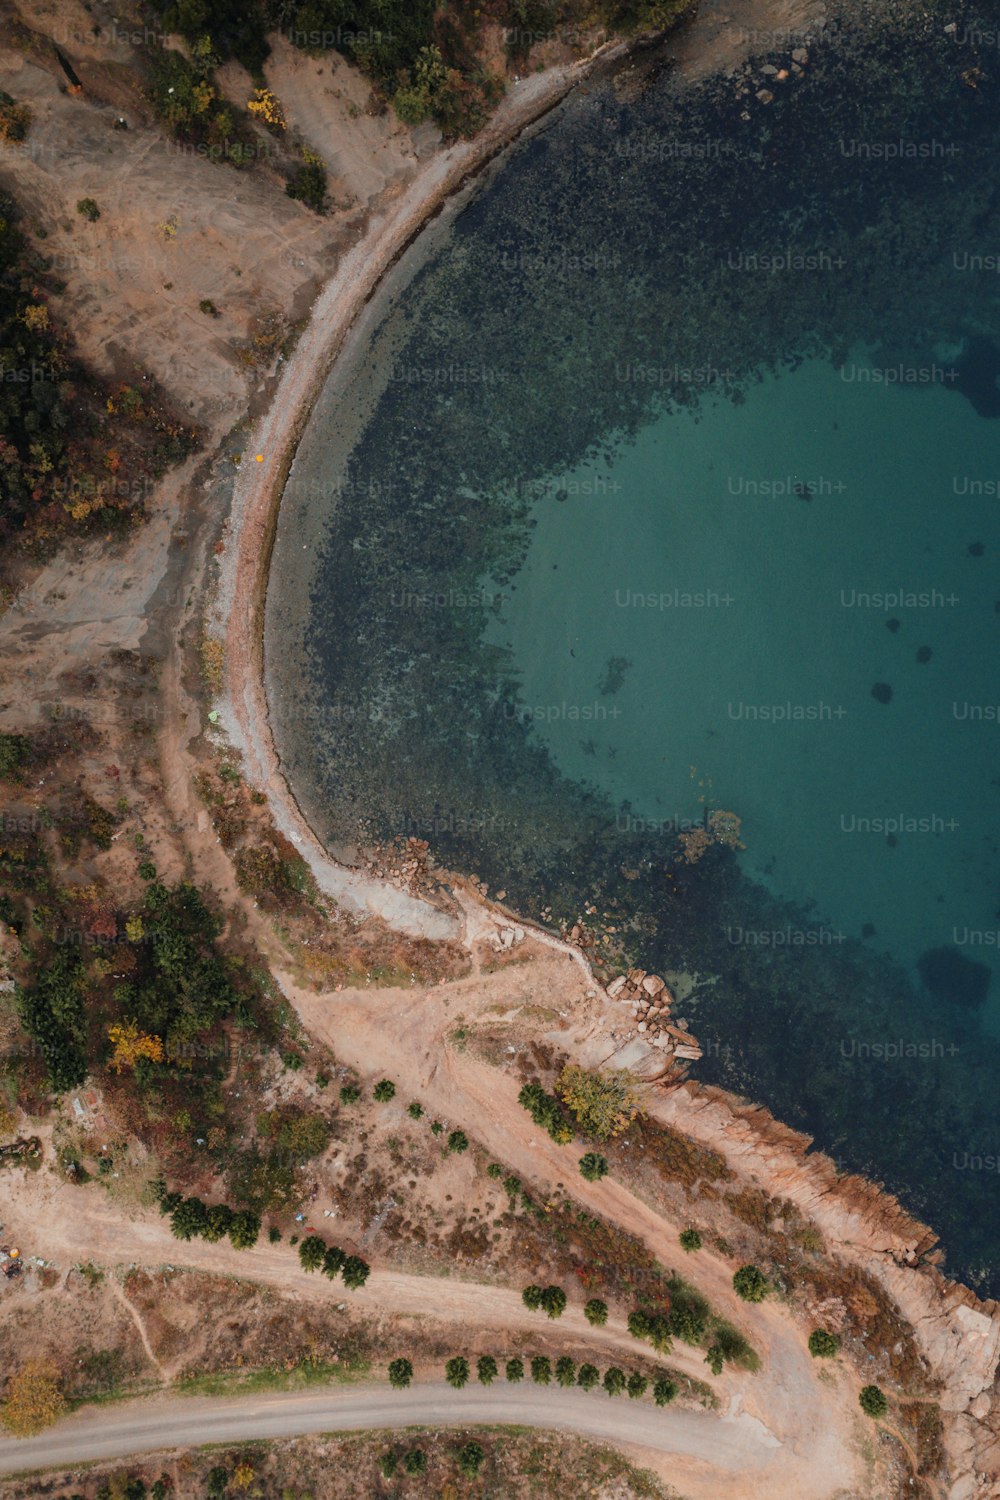 Una vista aérea de una carretera cerca de un cuerpo de agua